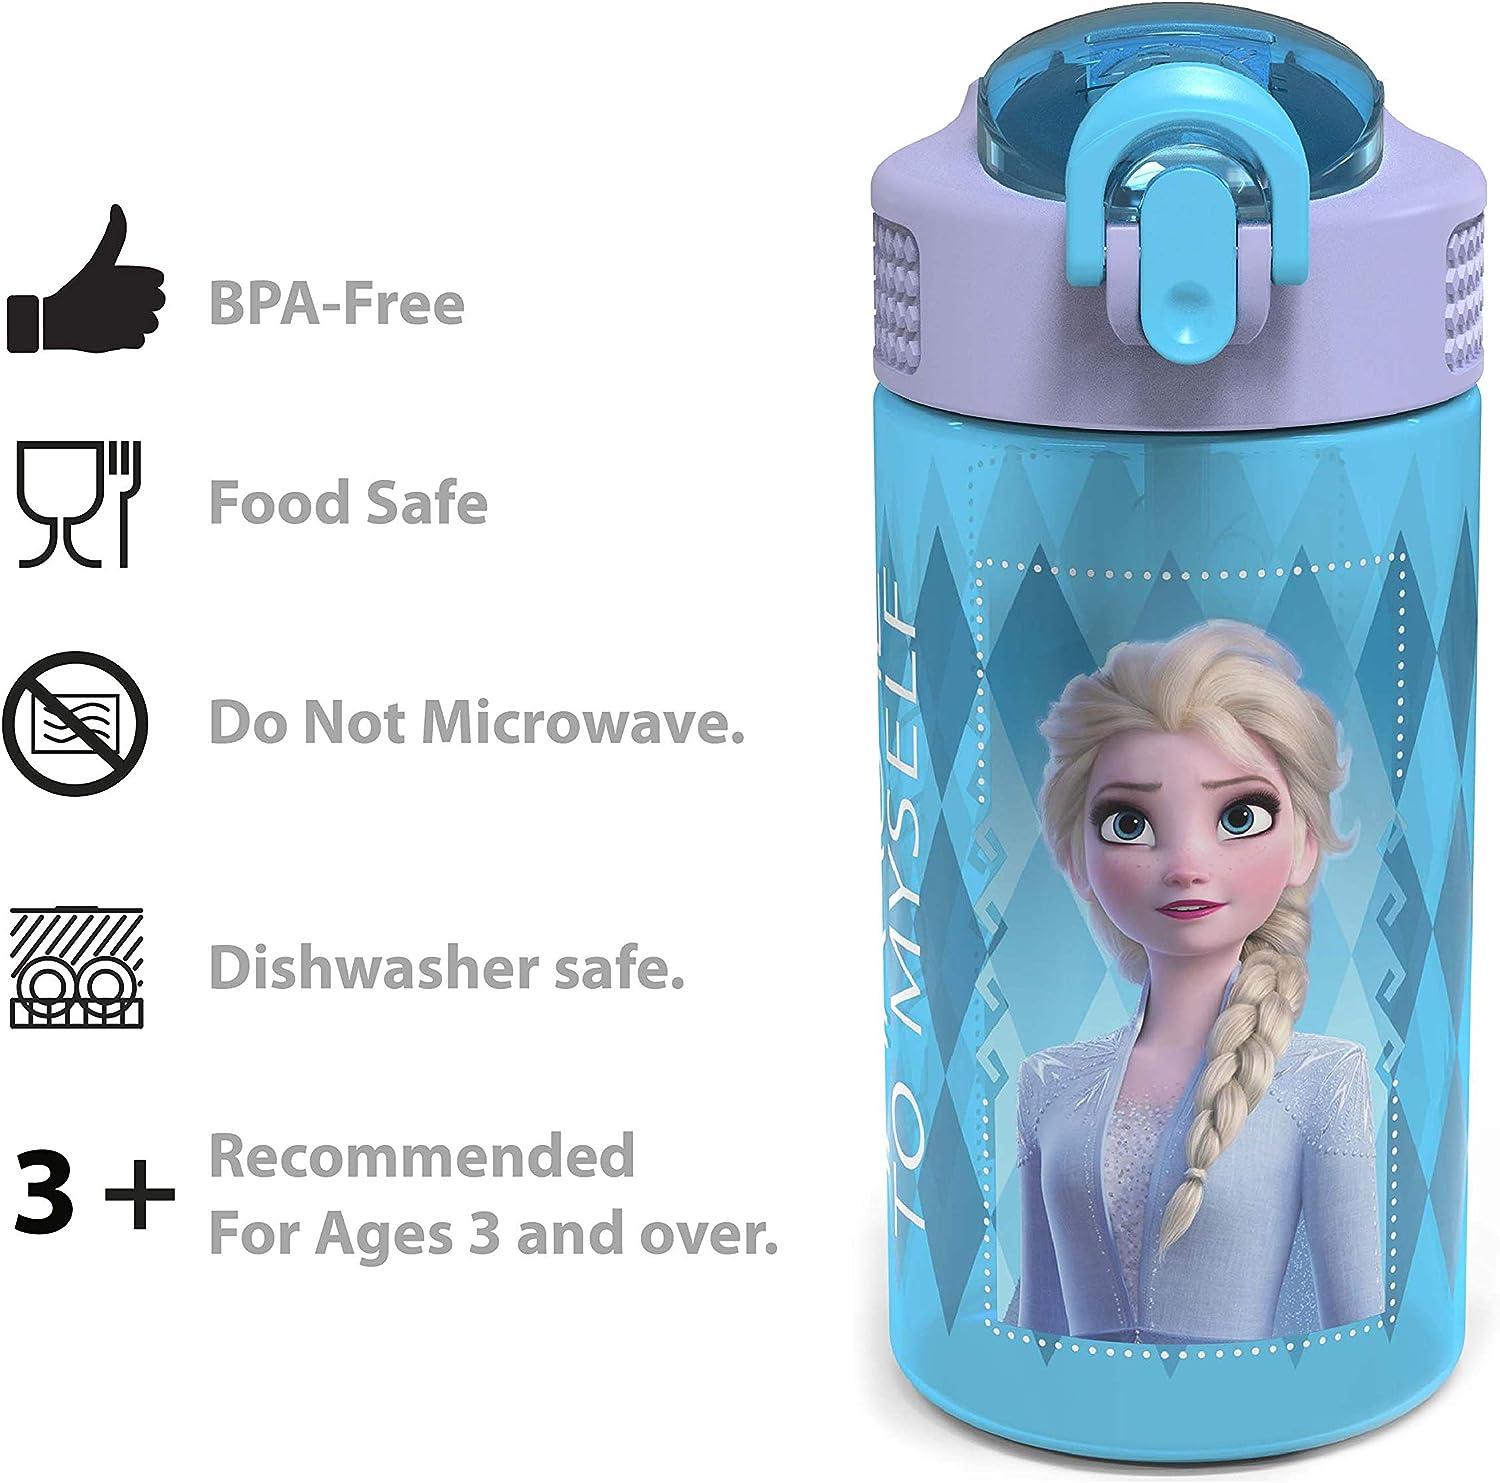 Zak Designs Disney 18/8 Stainless Steel Kids Water Bottle with